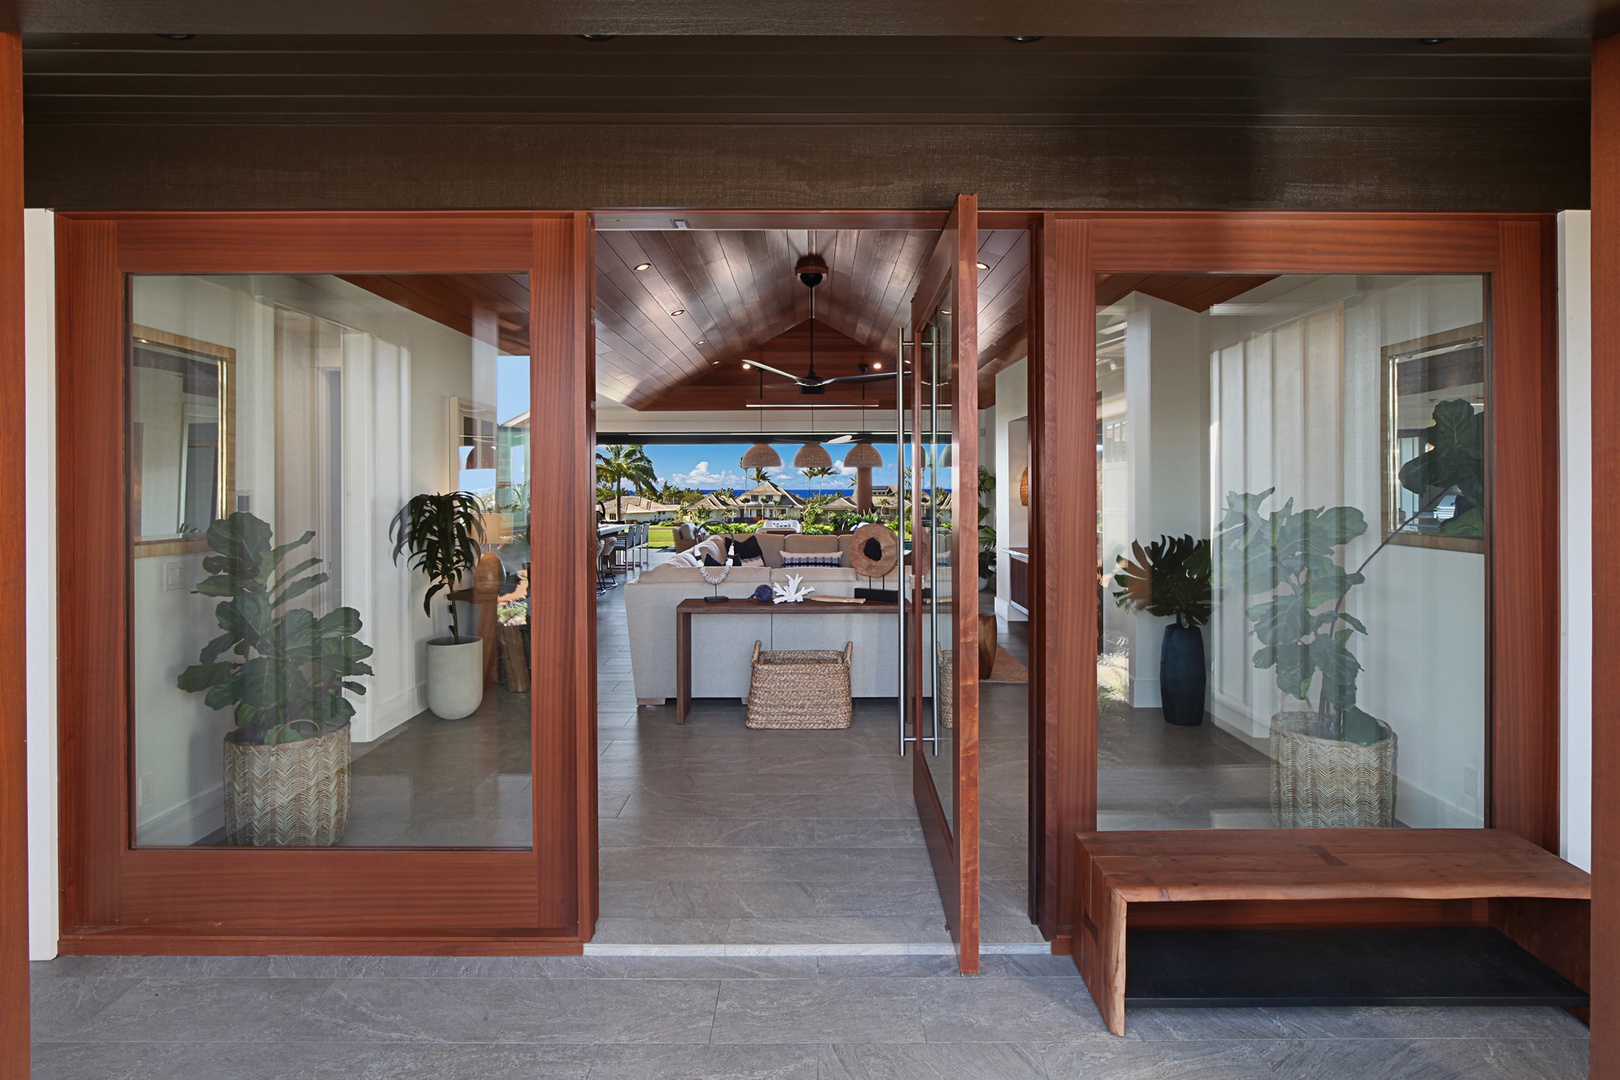 Koloa Vacation Rentals, Hale Kainani #6 E Komo Mai - Entrance with beautiful pivot door and amazing views